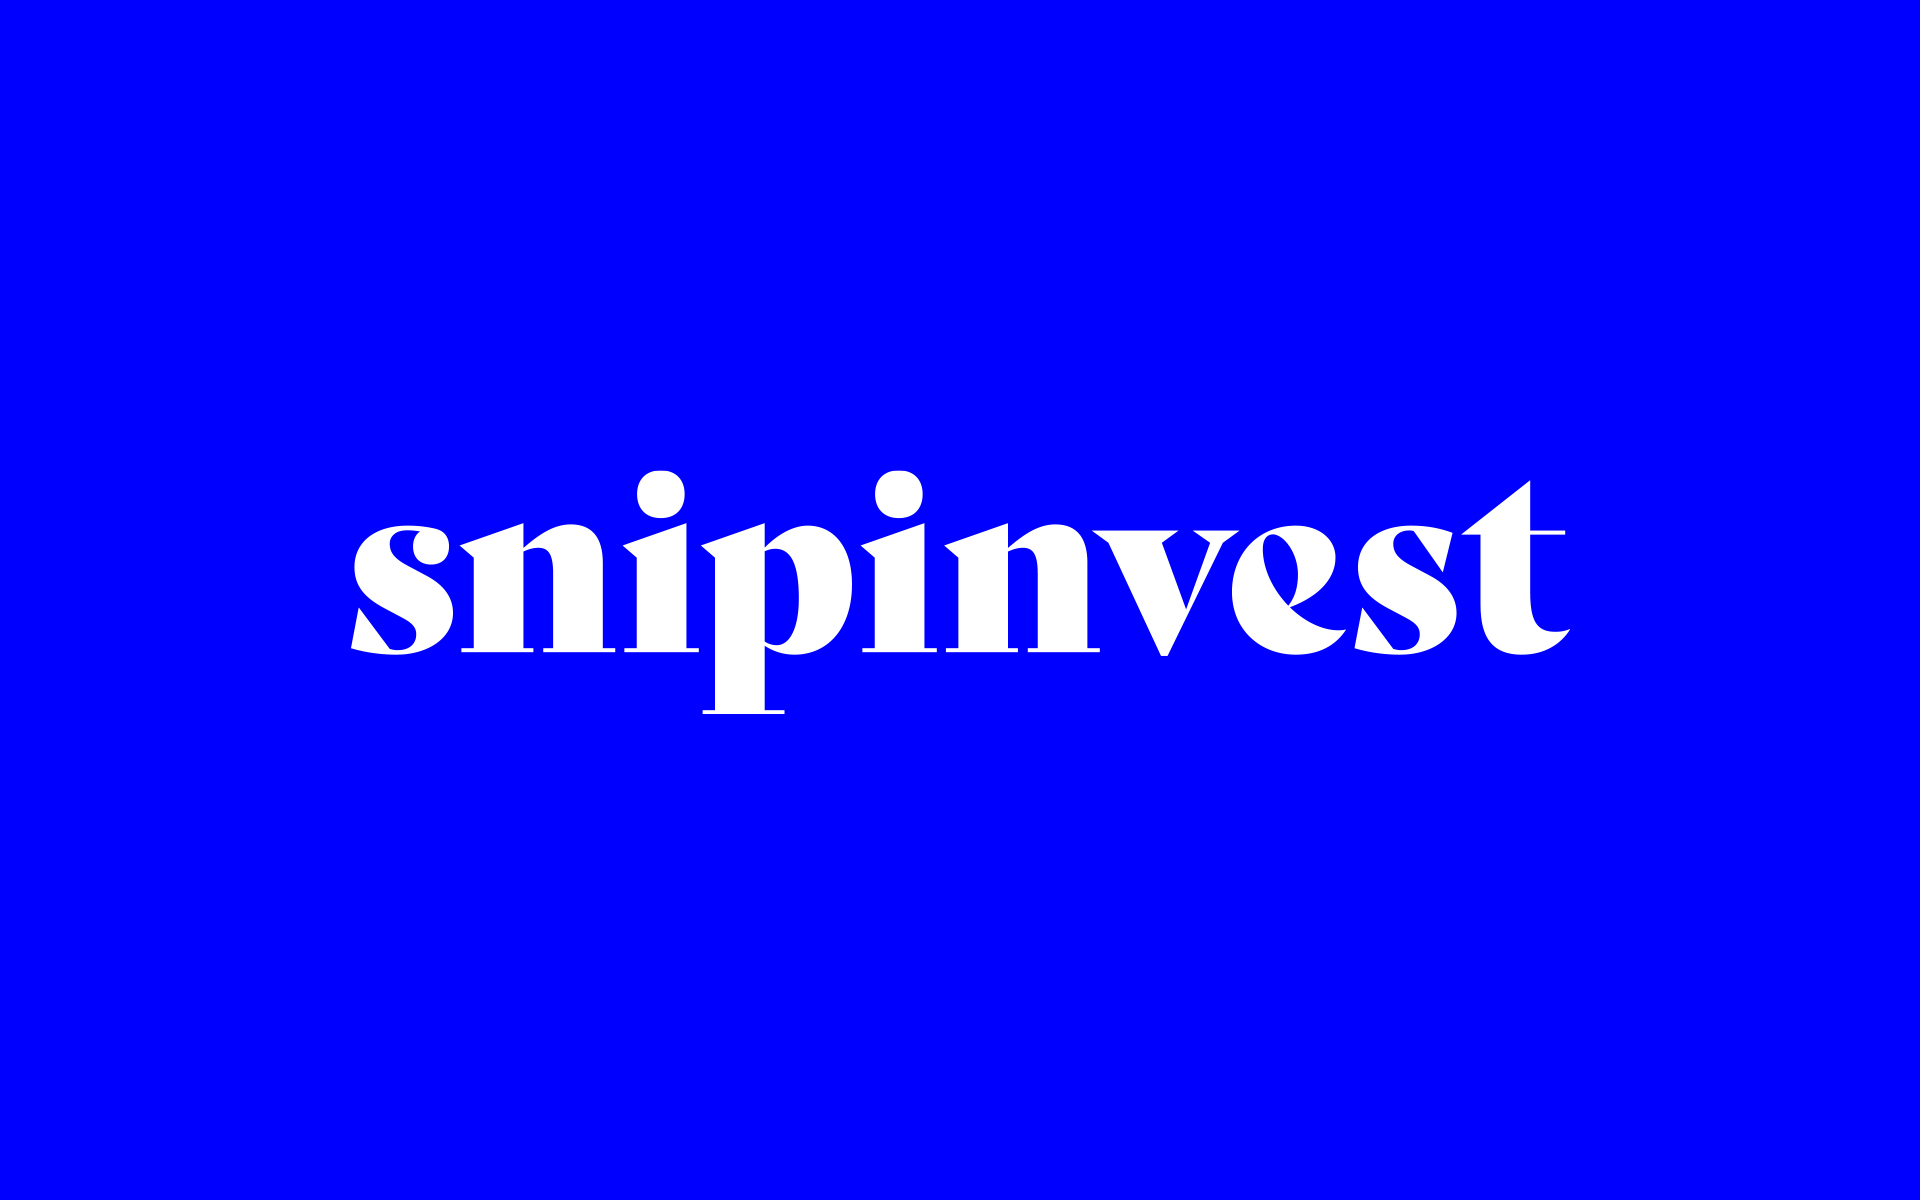 snipinvest Logotype